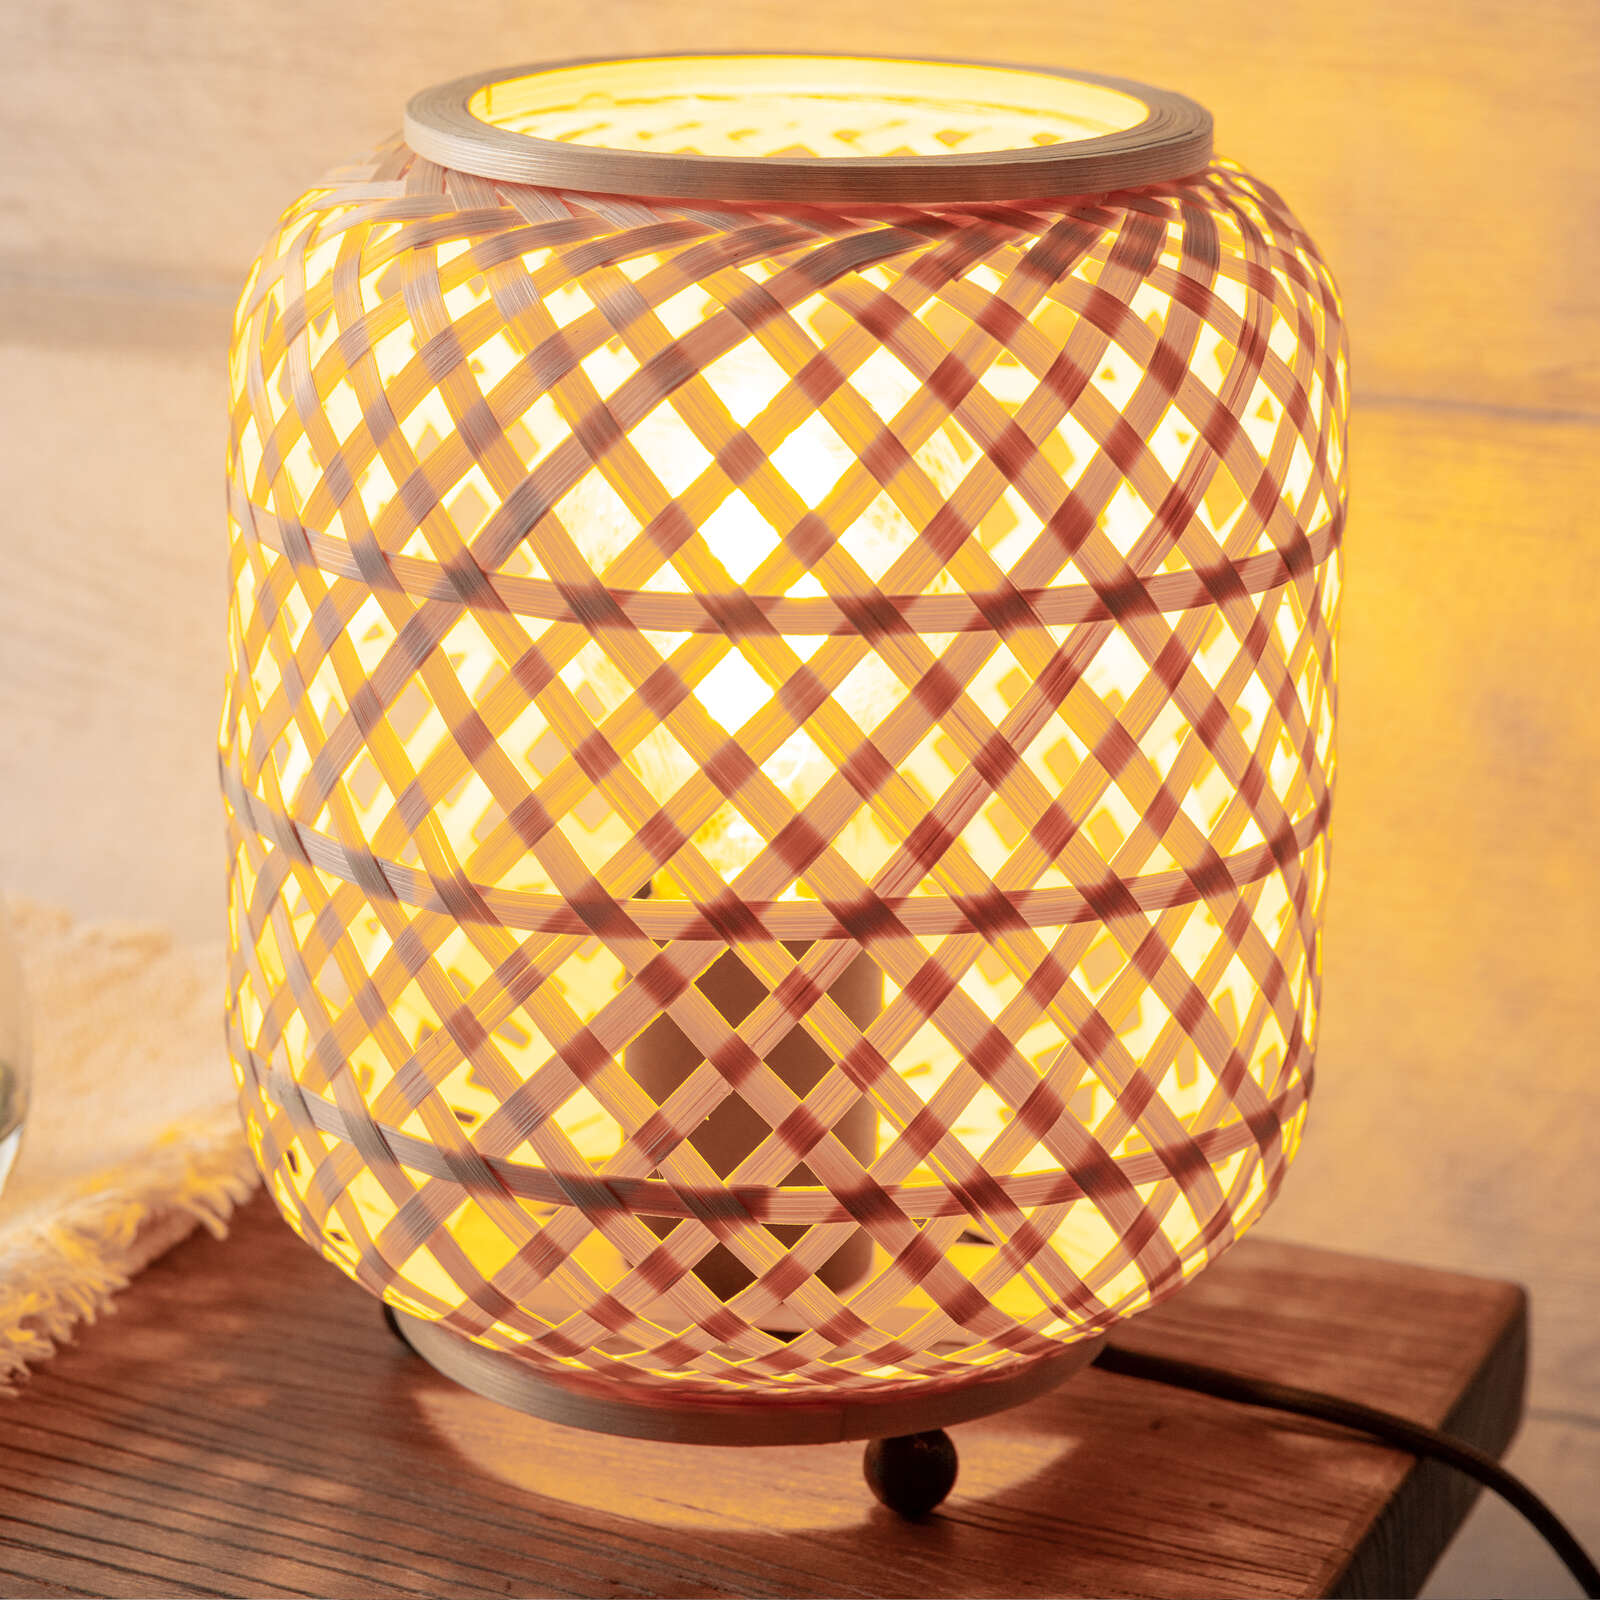             Bamboo table lamp - Lina - Brown
        